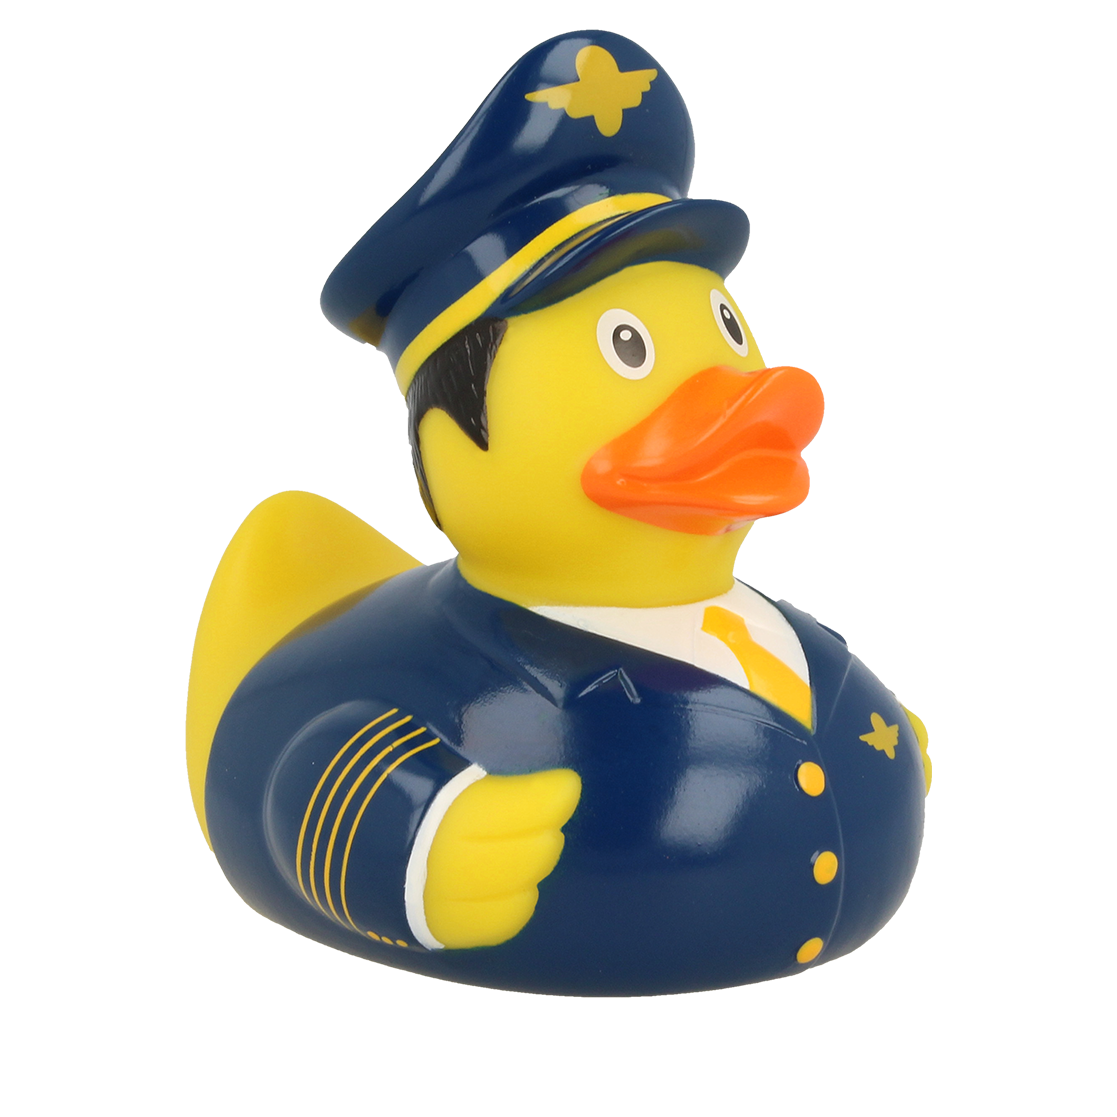 Line pilot duck